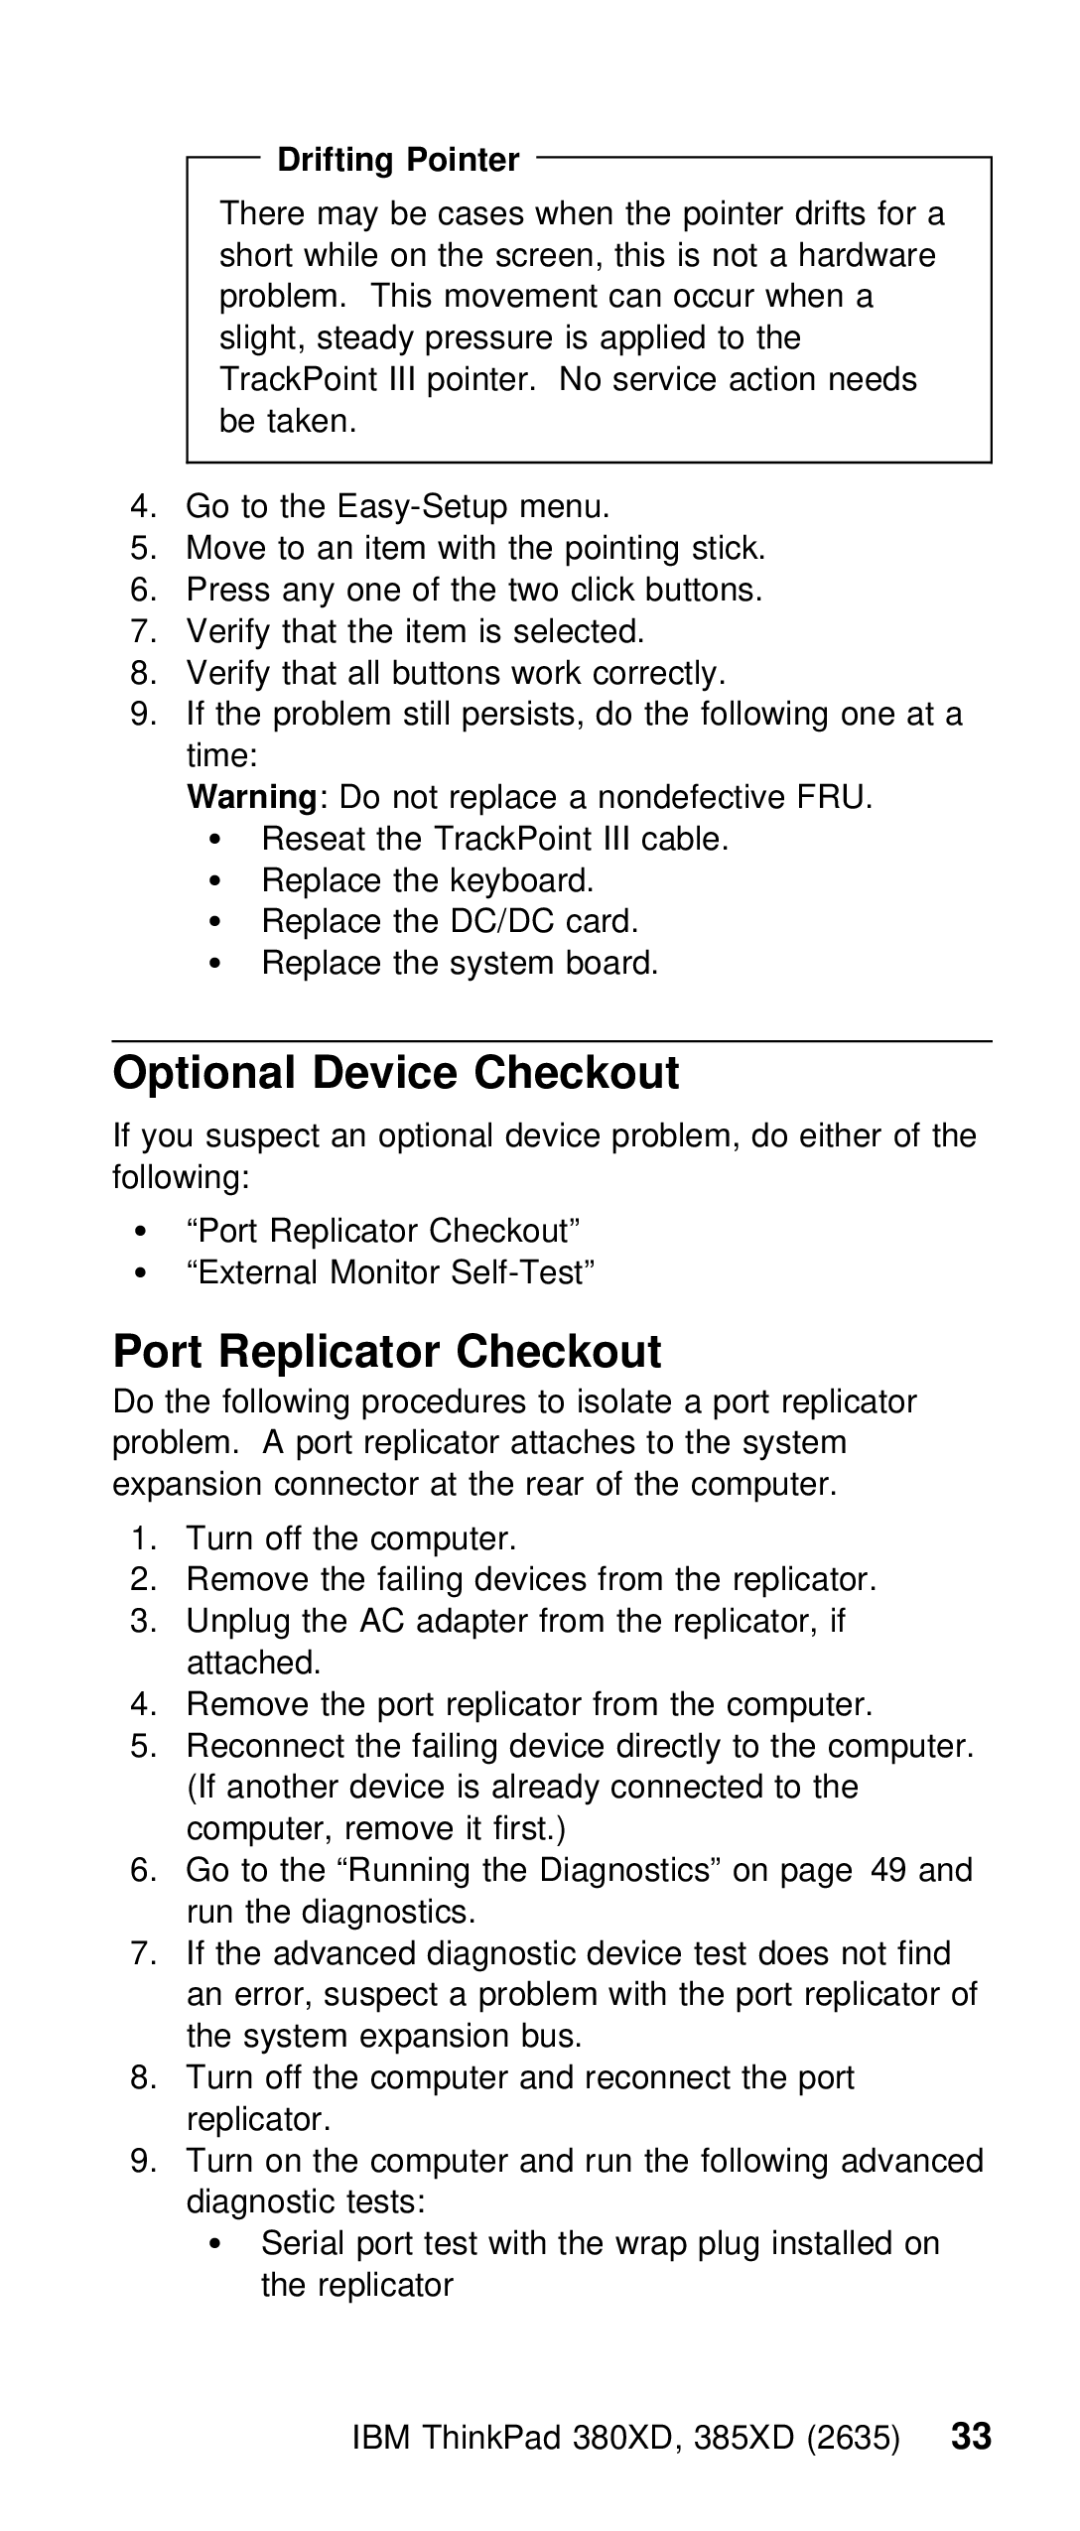 IBM THINKPAD 385XD (2635) manual Optional Device Checkout, Port Replicator Checkout, Drifting Pointer 